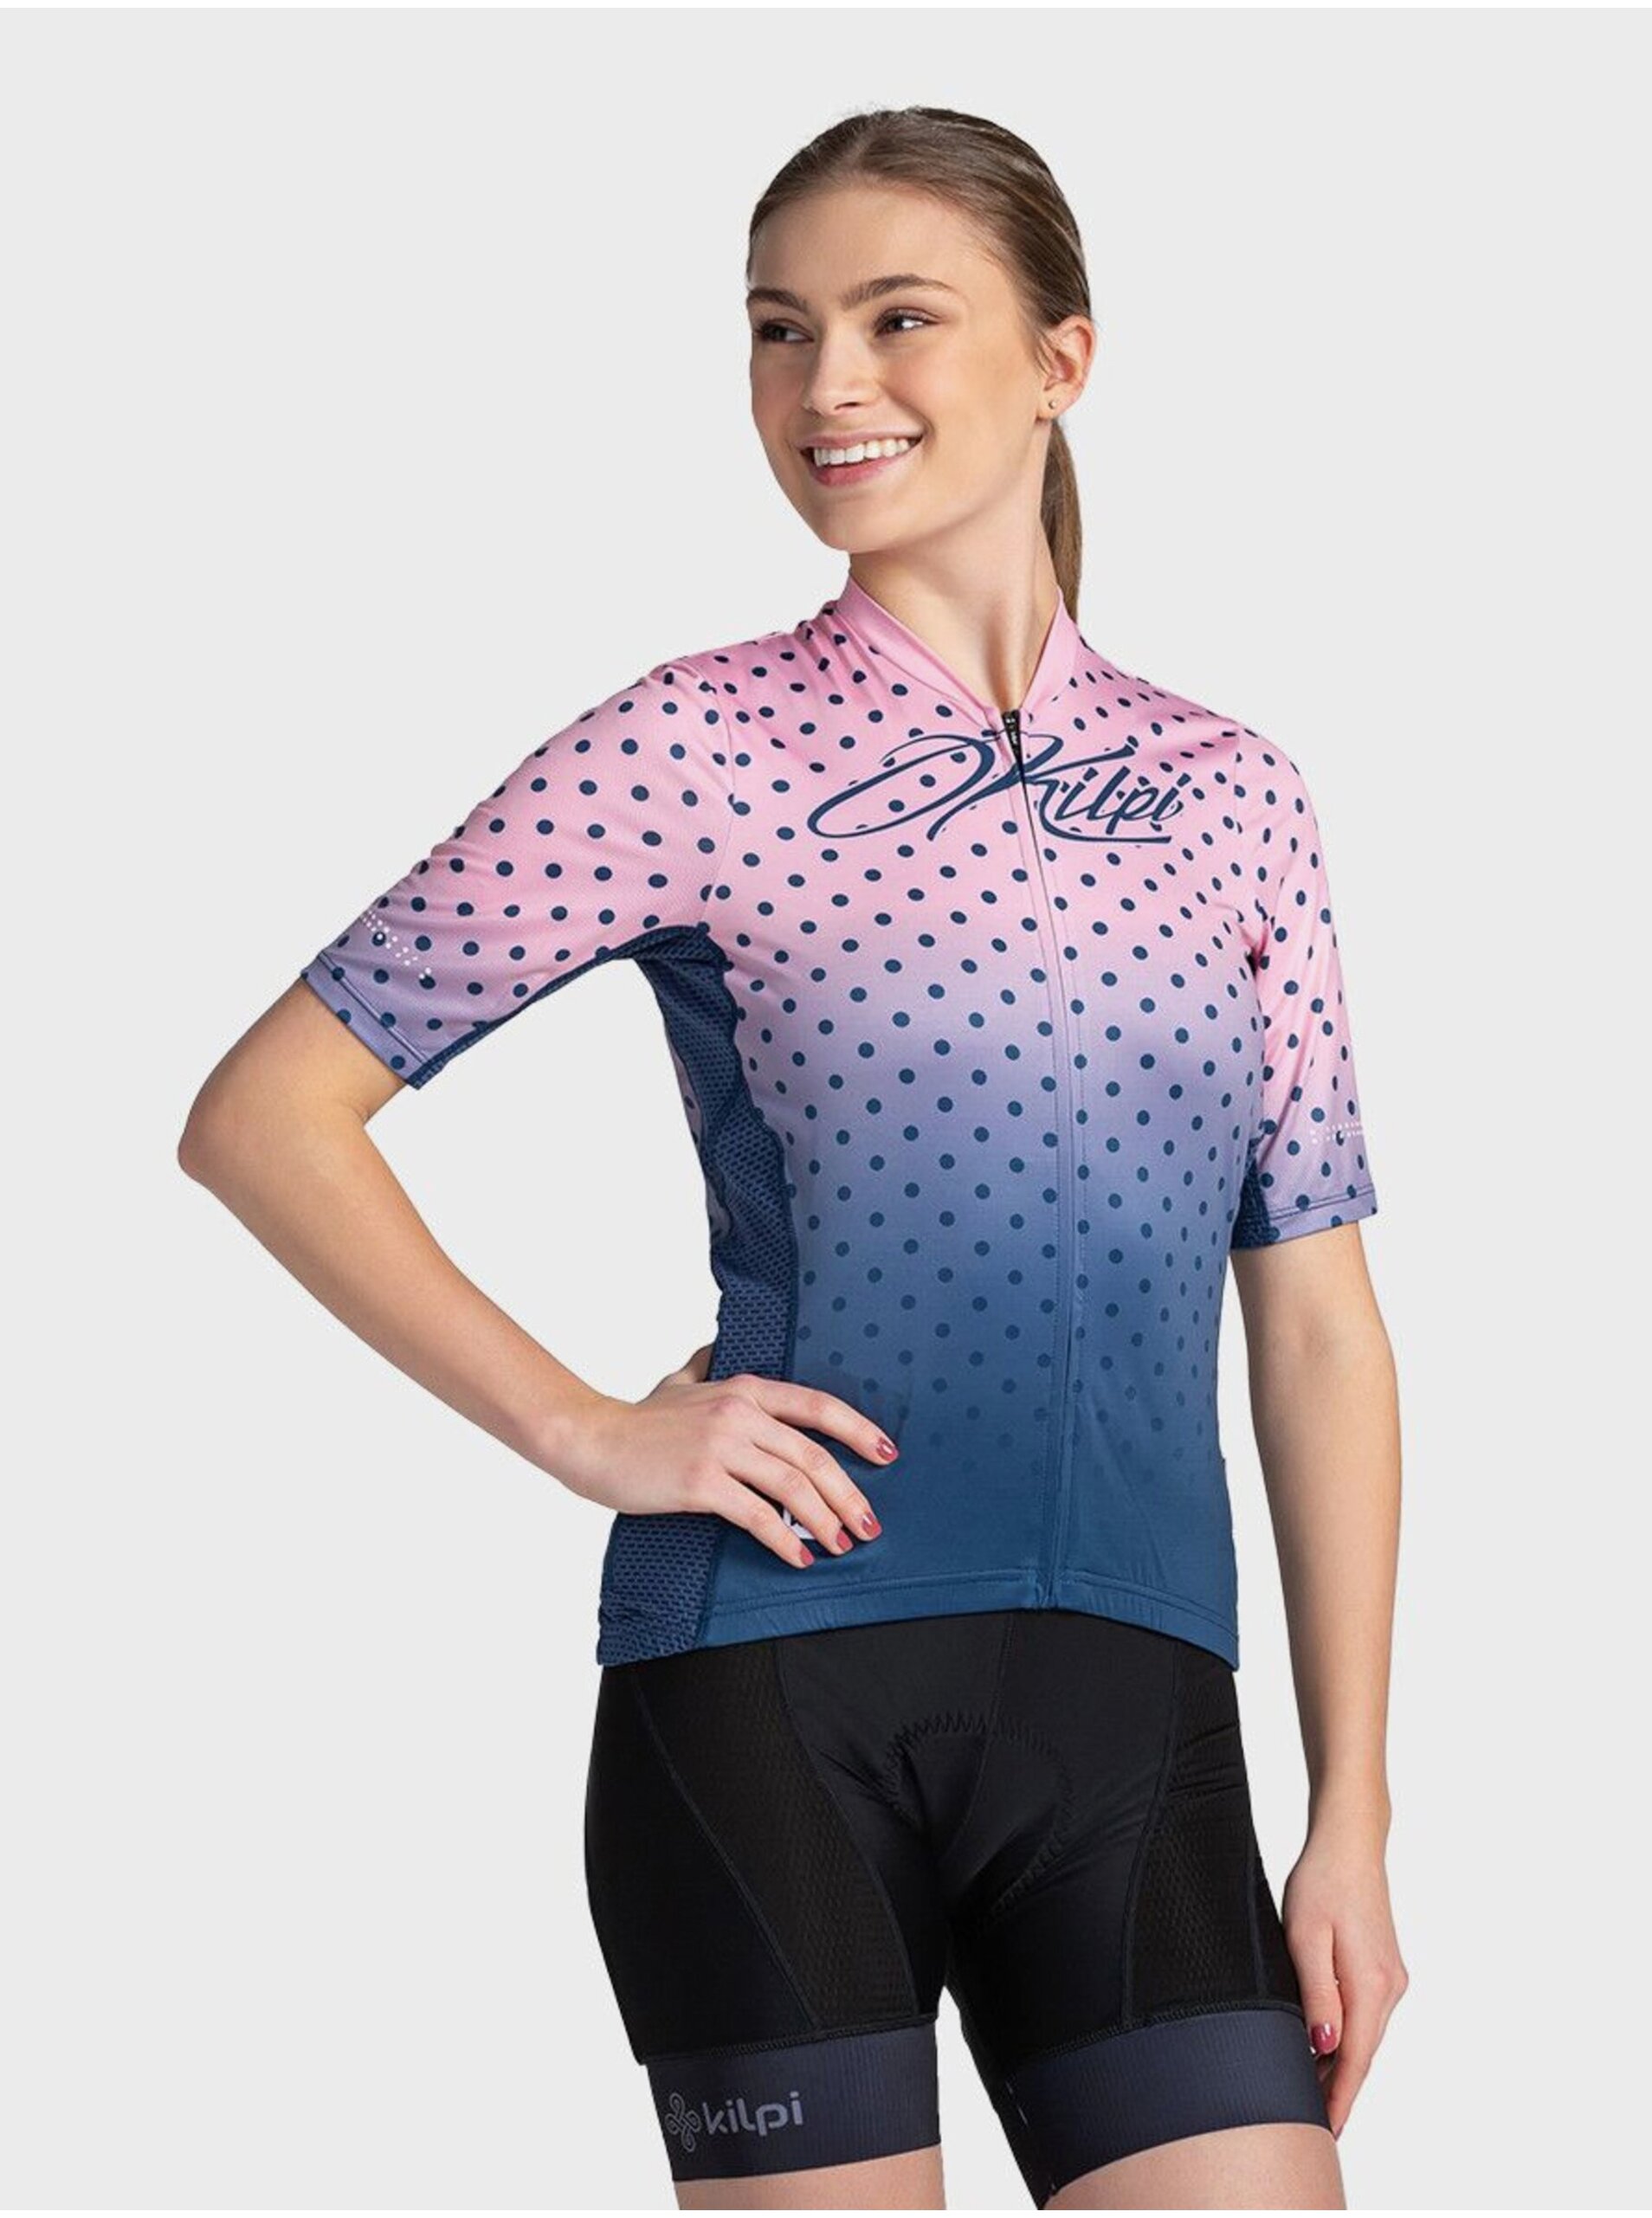 Lacno Modro-ružové dámske športové tričko na zips Kilpi RITAEL